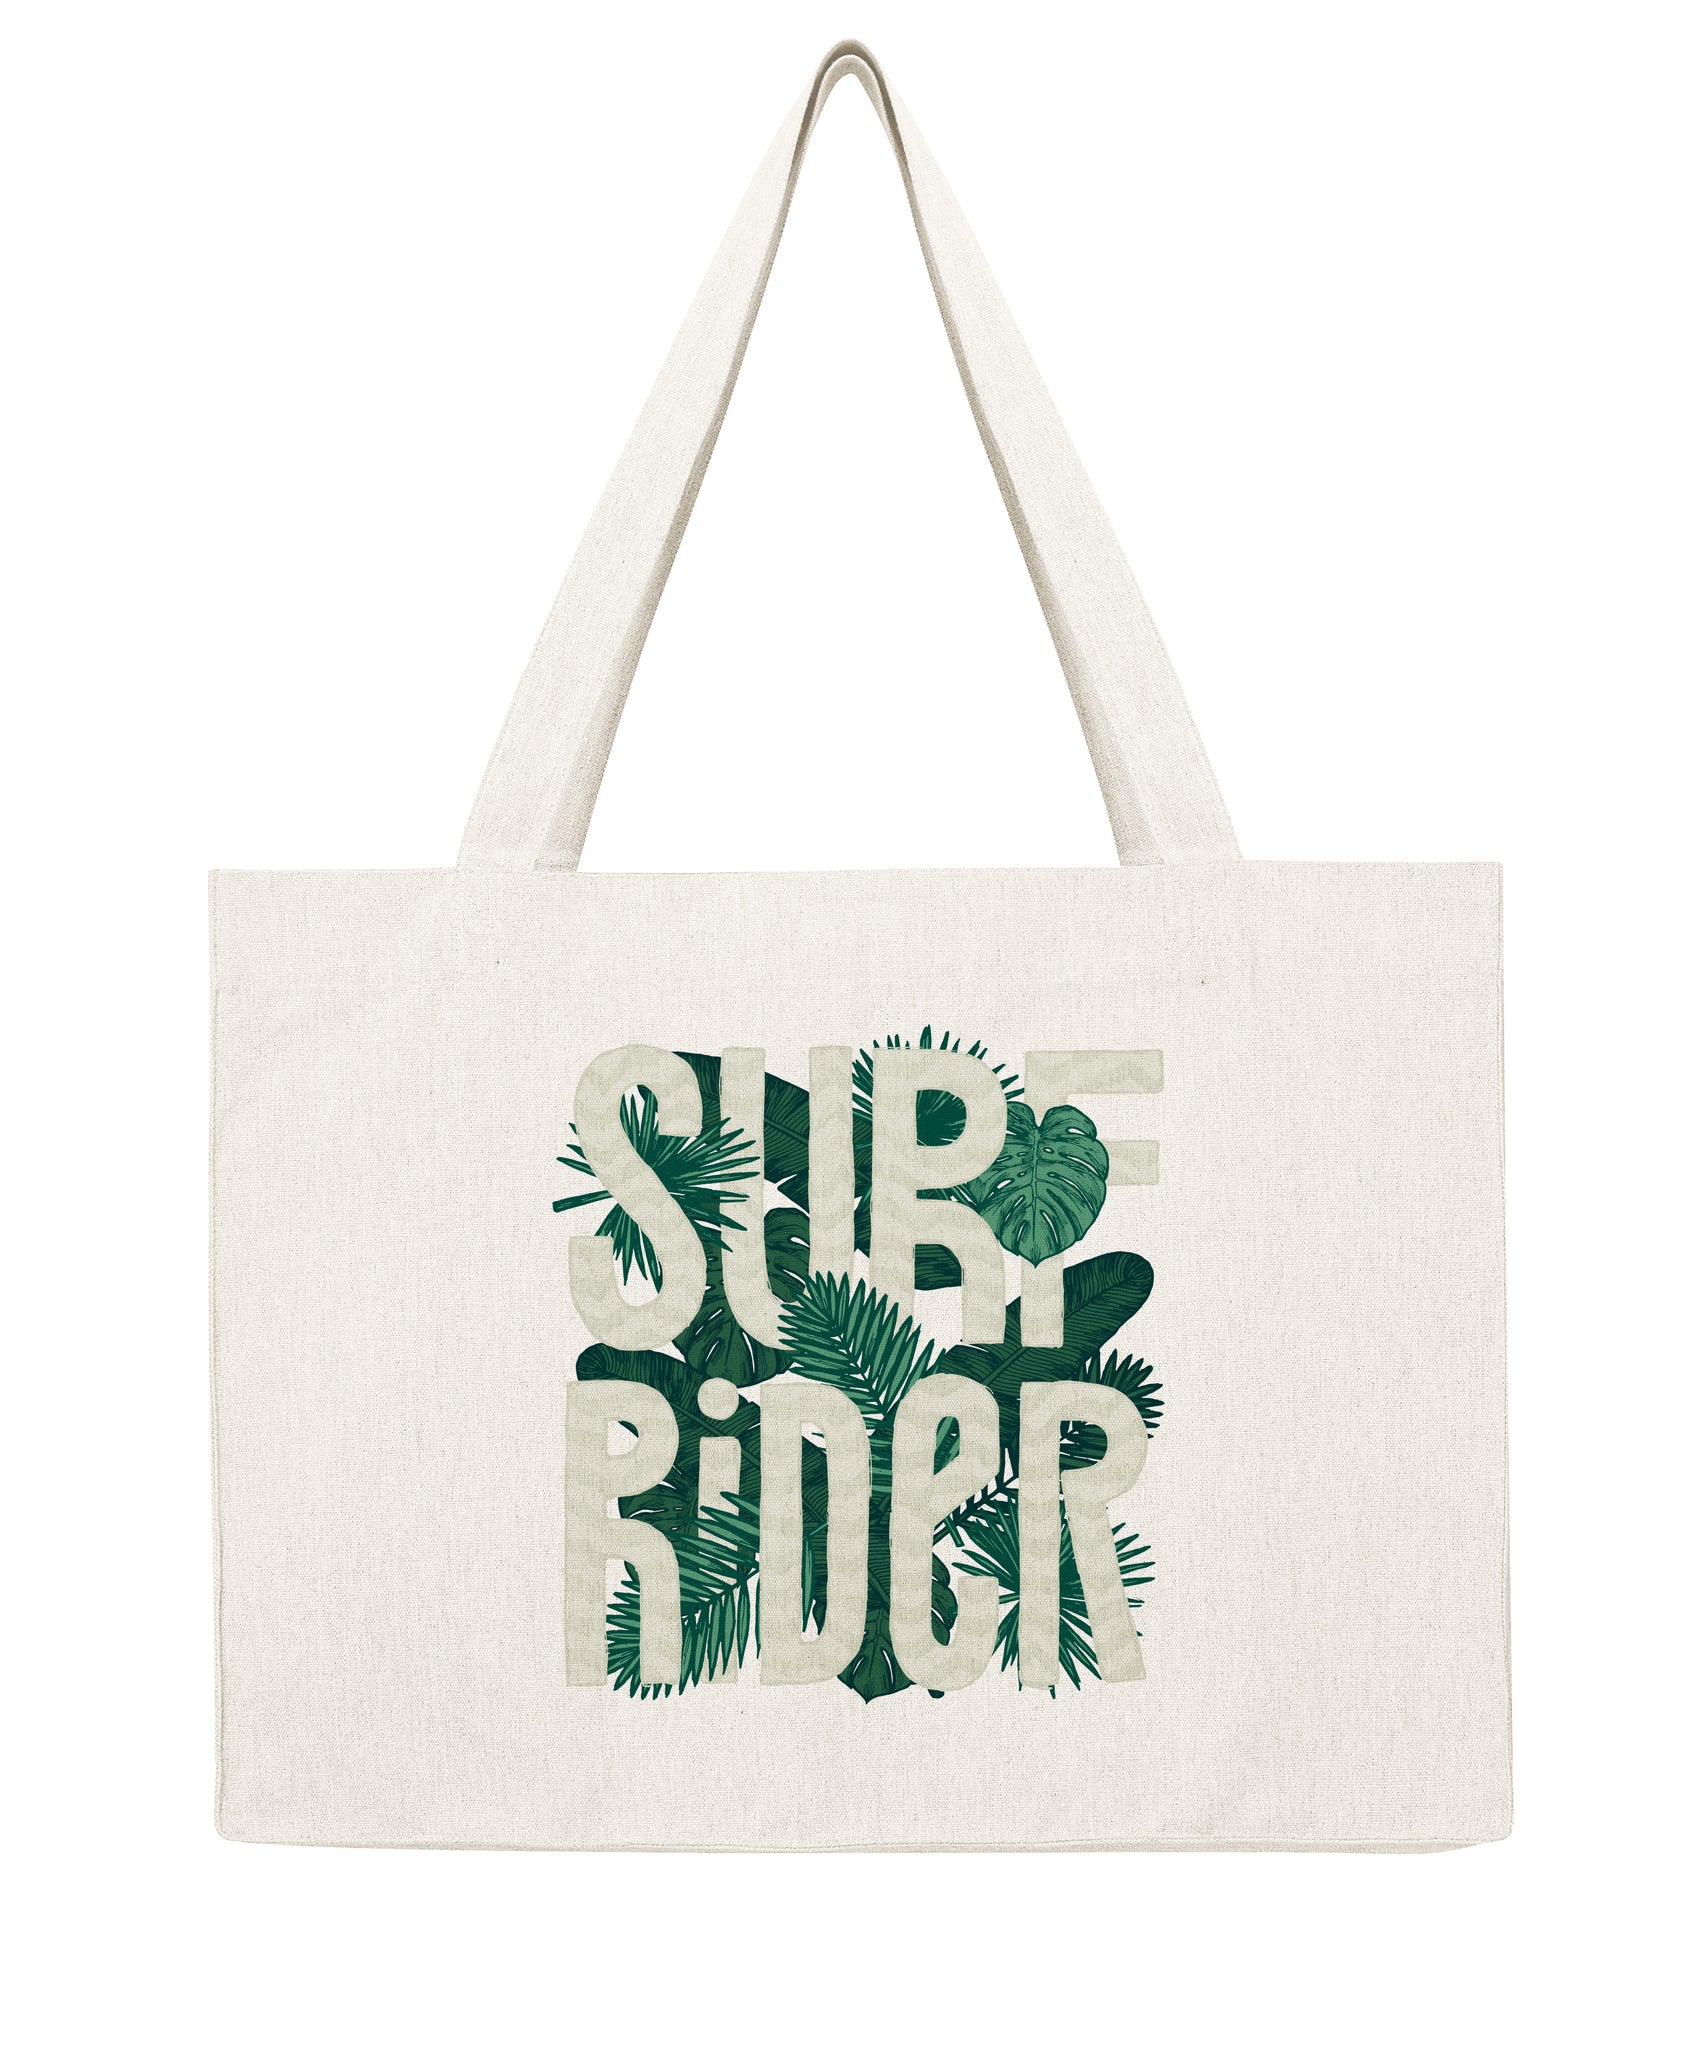 Surf Rider - Shopping bag-Sacs-Atelier Amelot